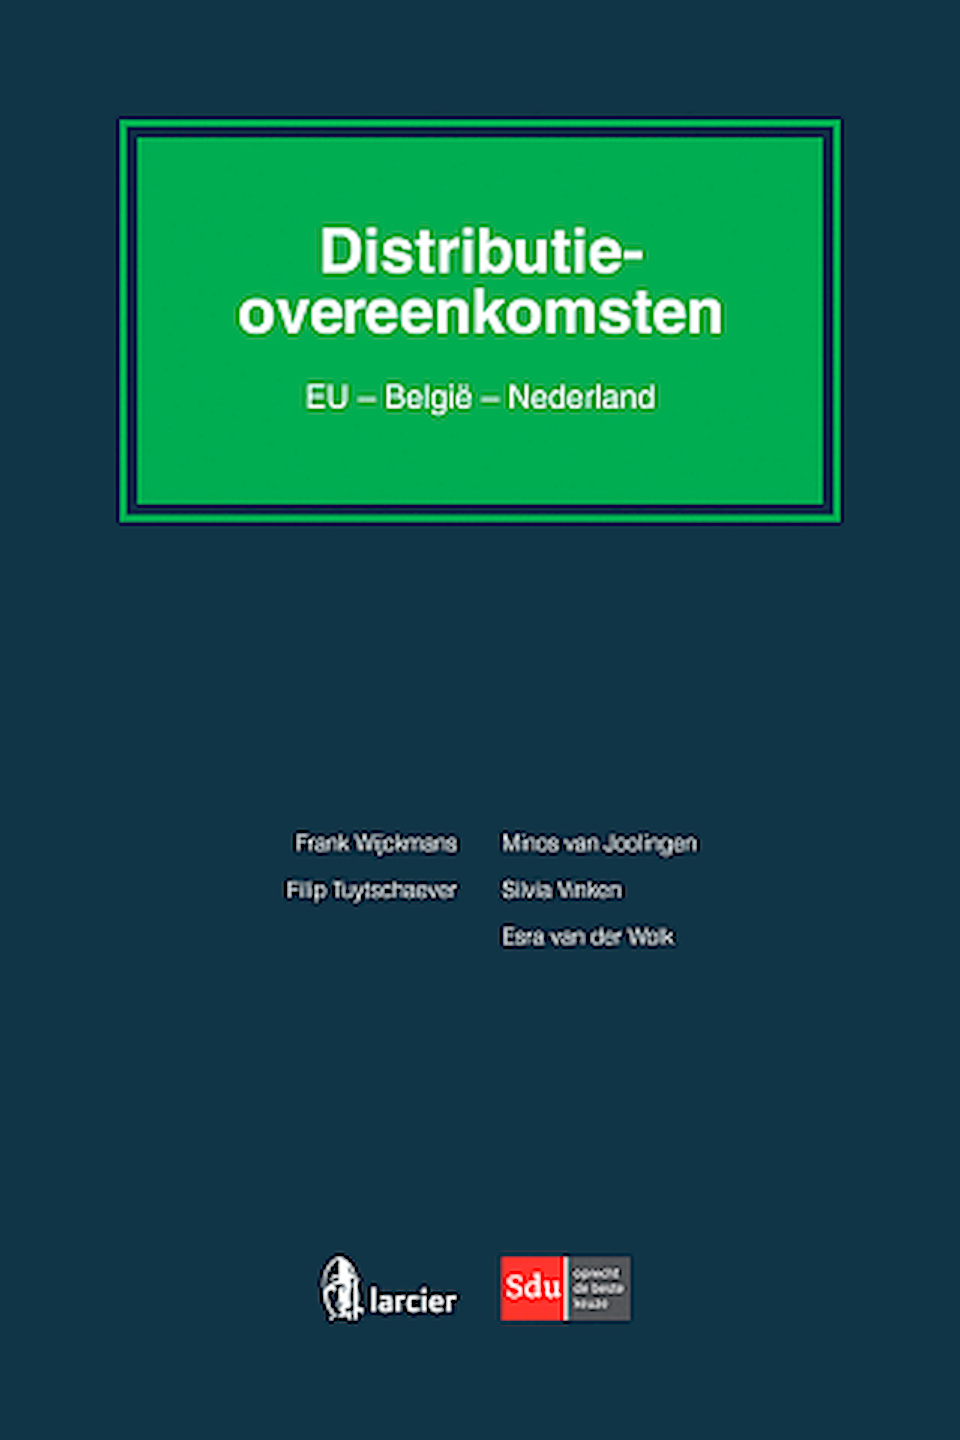 Distribution agreements EU – Belgium and Netherlands